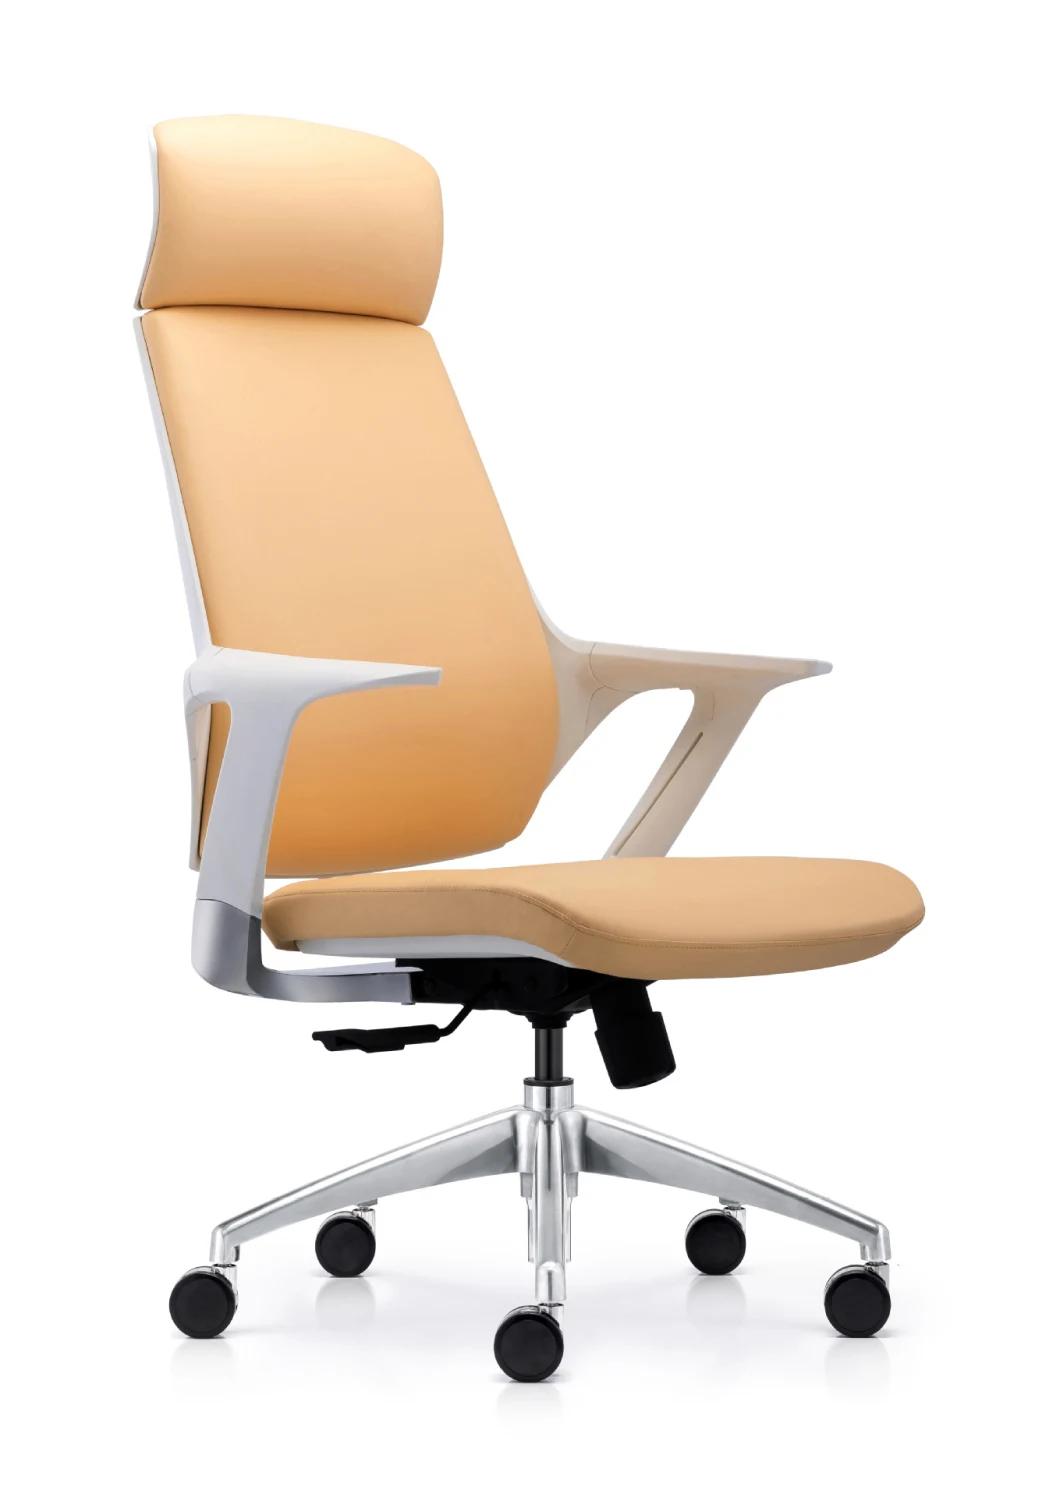 New Design High Back Modern Ergonomic Boss Office Leather Chair